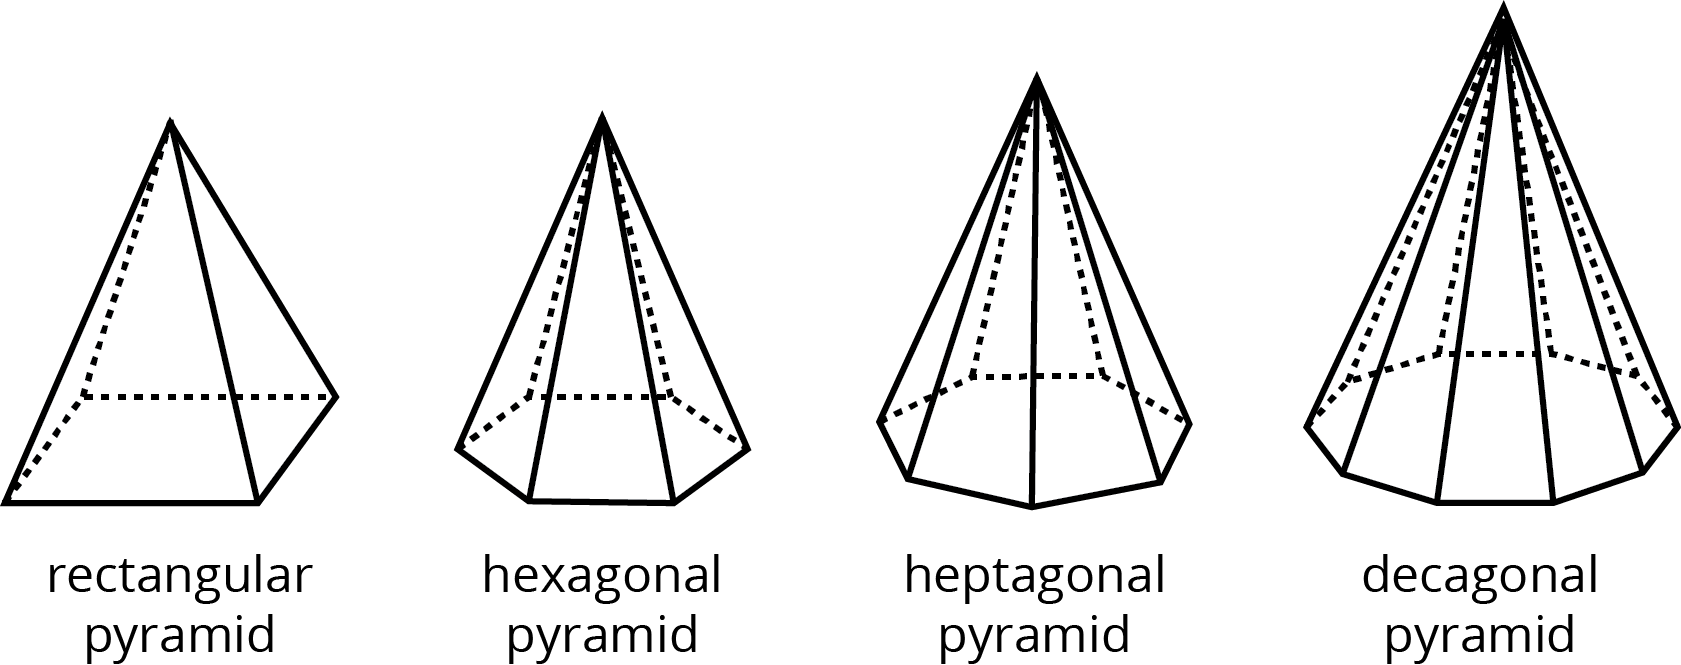 A rectangular pyramid, a hexagonal pyramid, a heptagonal pyramid, and a decagonal pyramid.